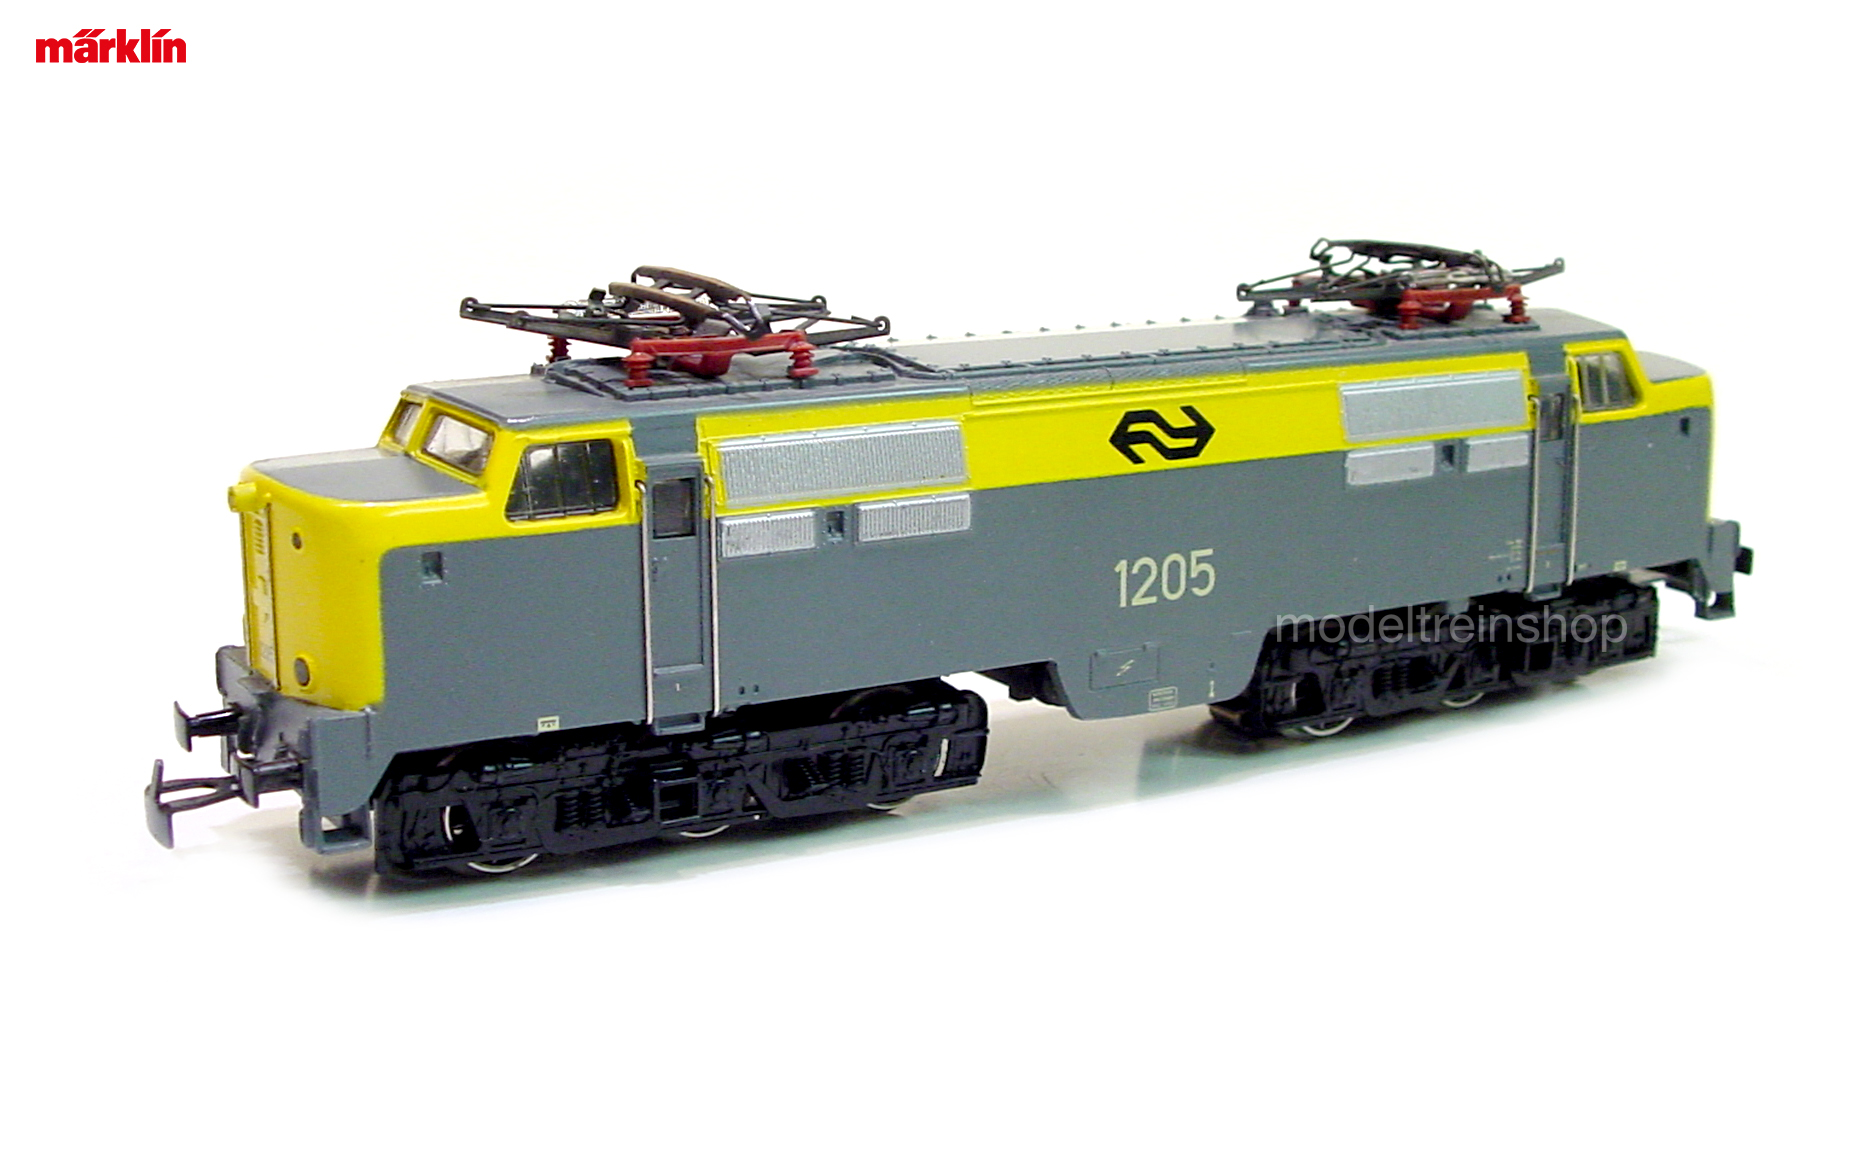 Zijn bekend cijfer Diploma Marklin H0 3055 V7 Electrische Locomotief Serie 1200 NS 1205 -  Modeltreinshop